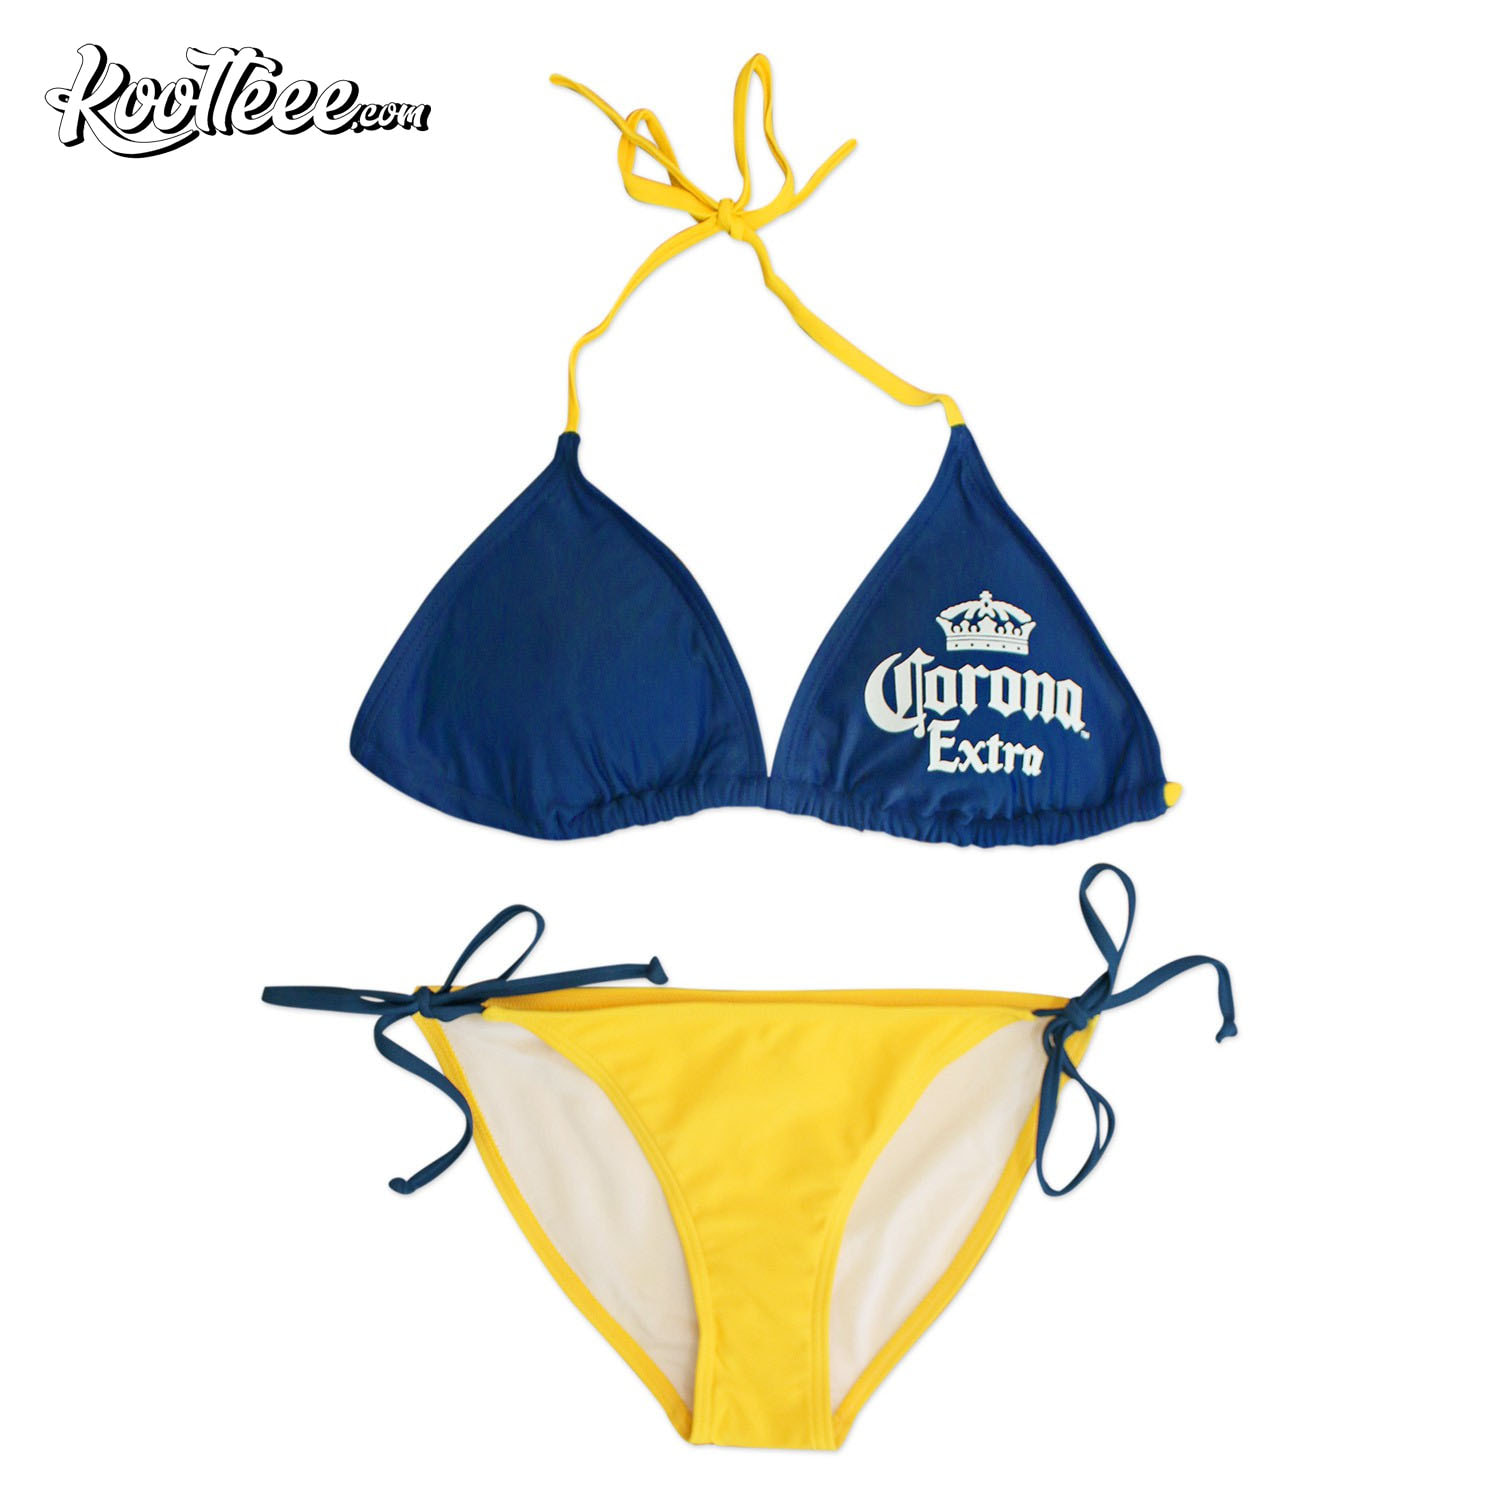 Corona Extra Women's Triangle String Bottom Bikini